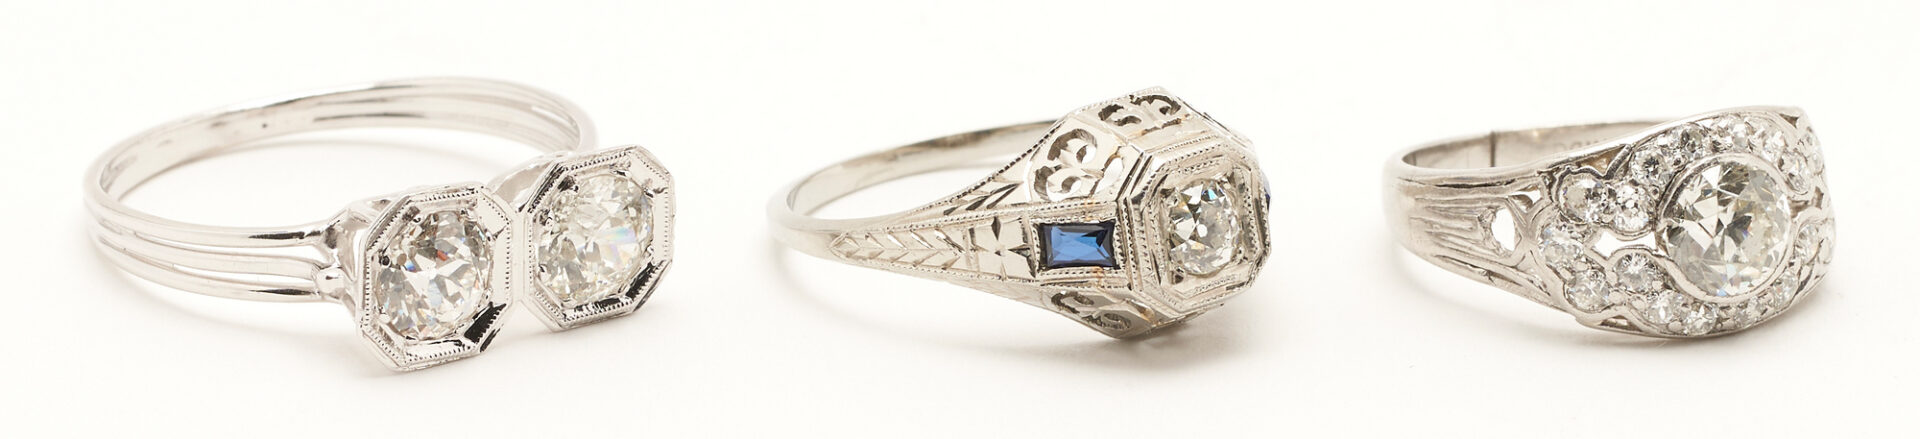 Lot 816: 3 Gold, Platinum, and Diamond Art Deco Rings